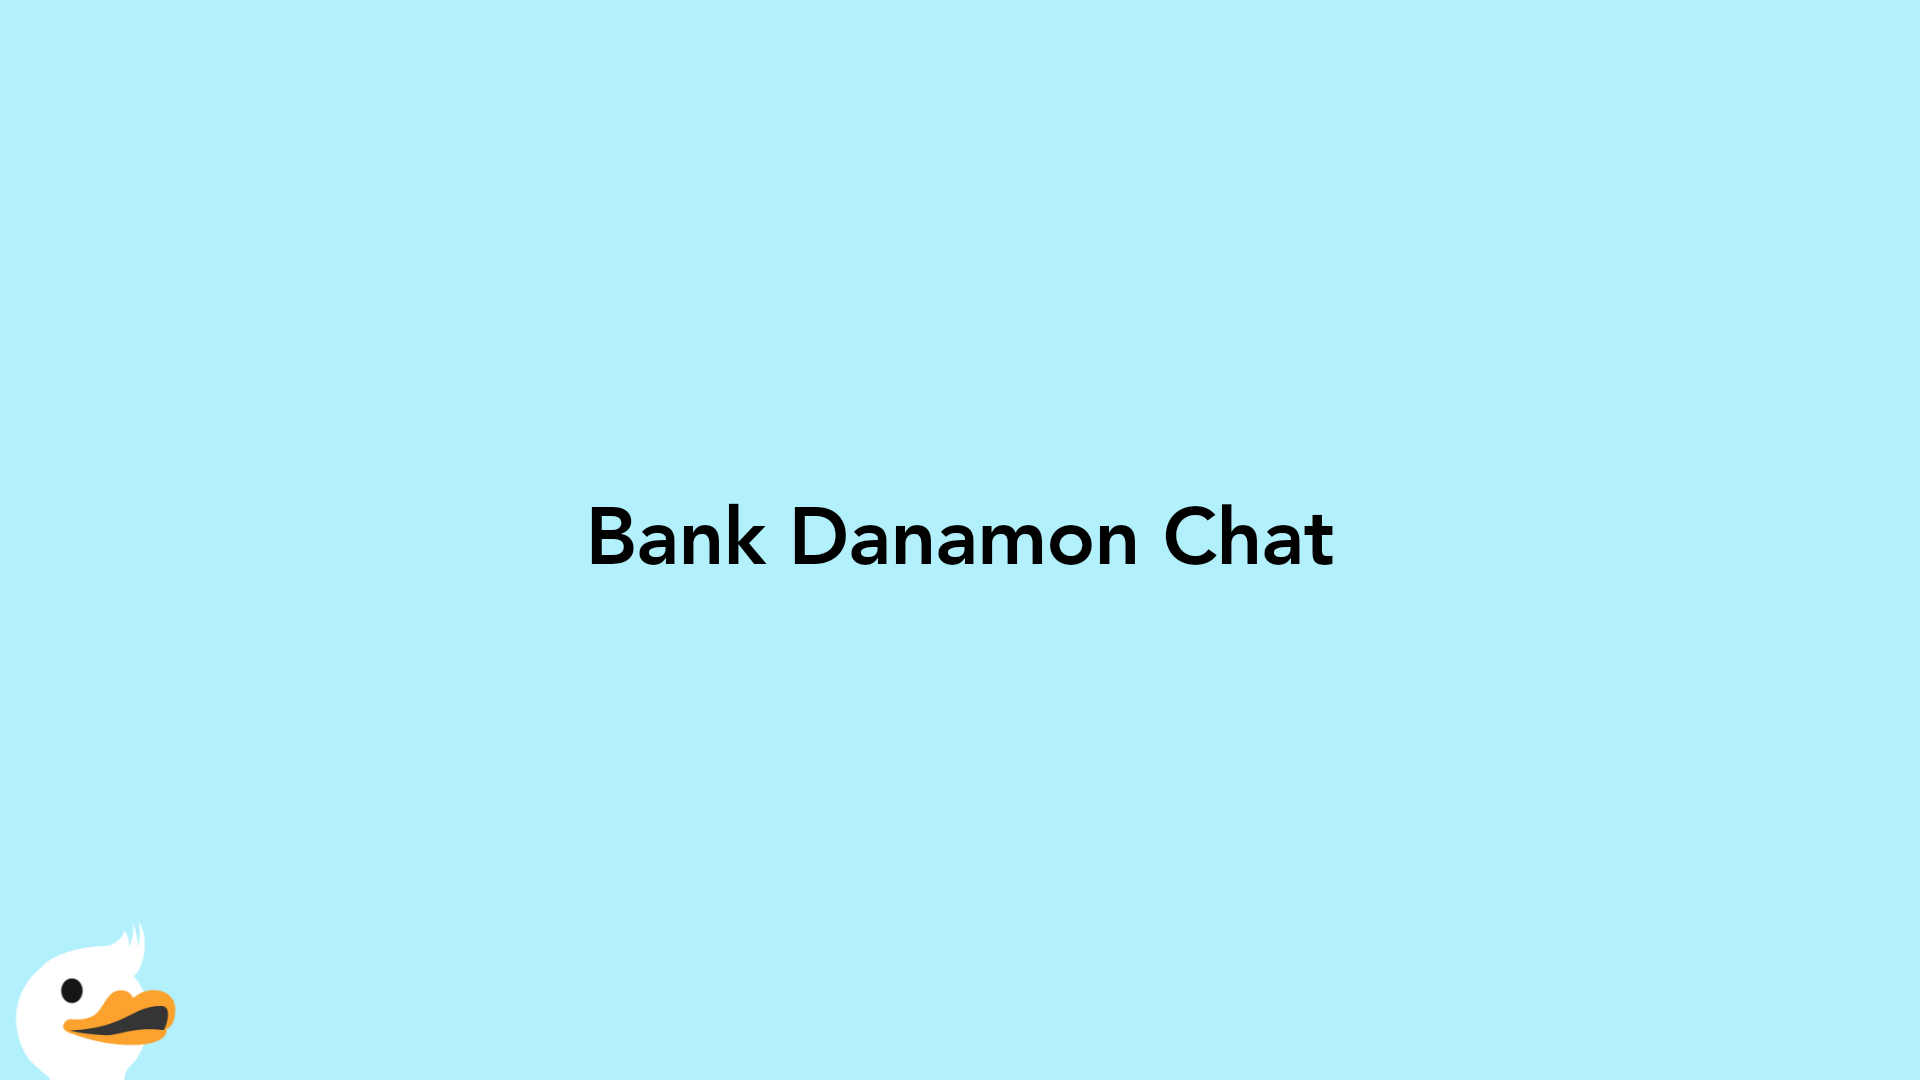 Bank Danamon Chat